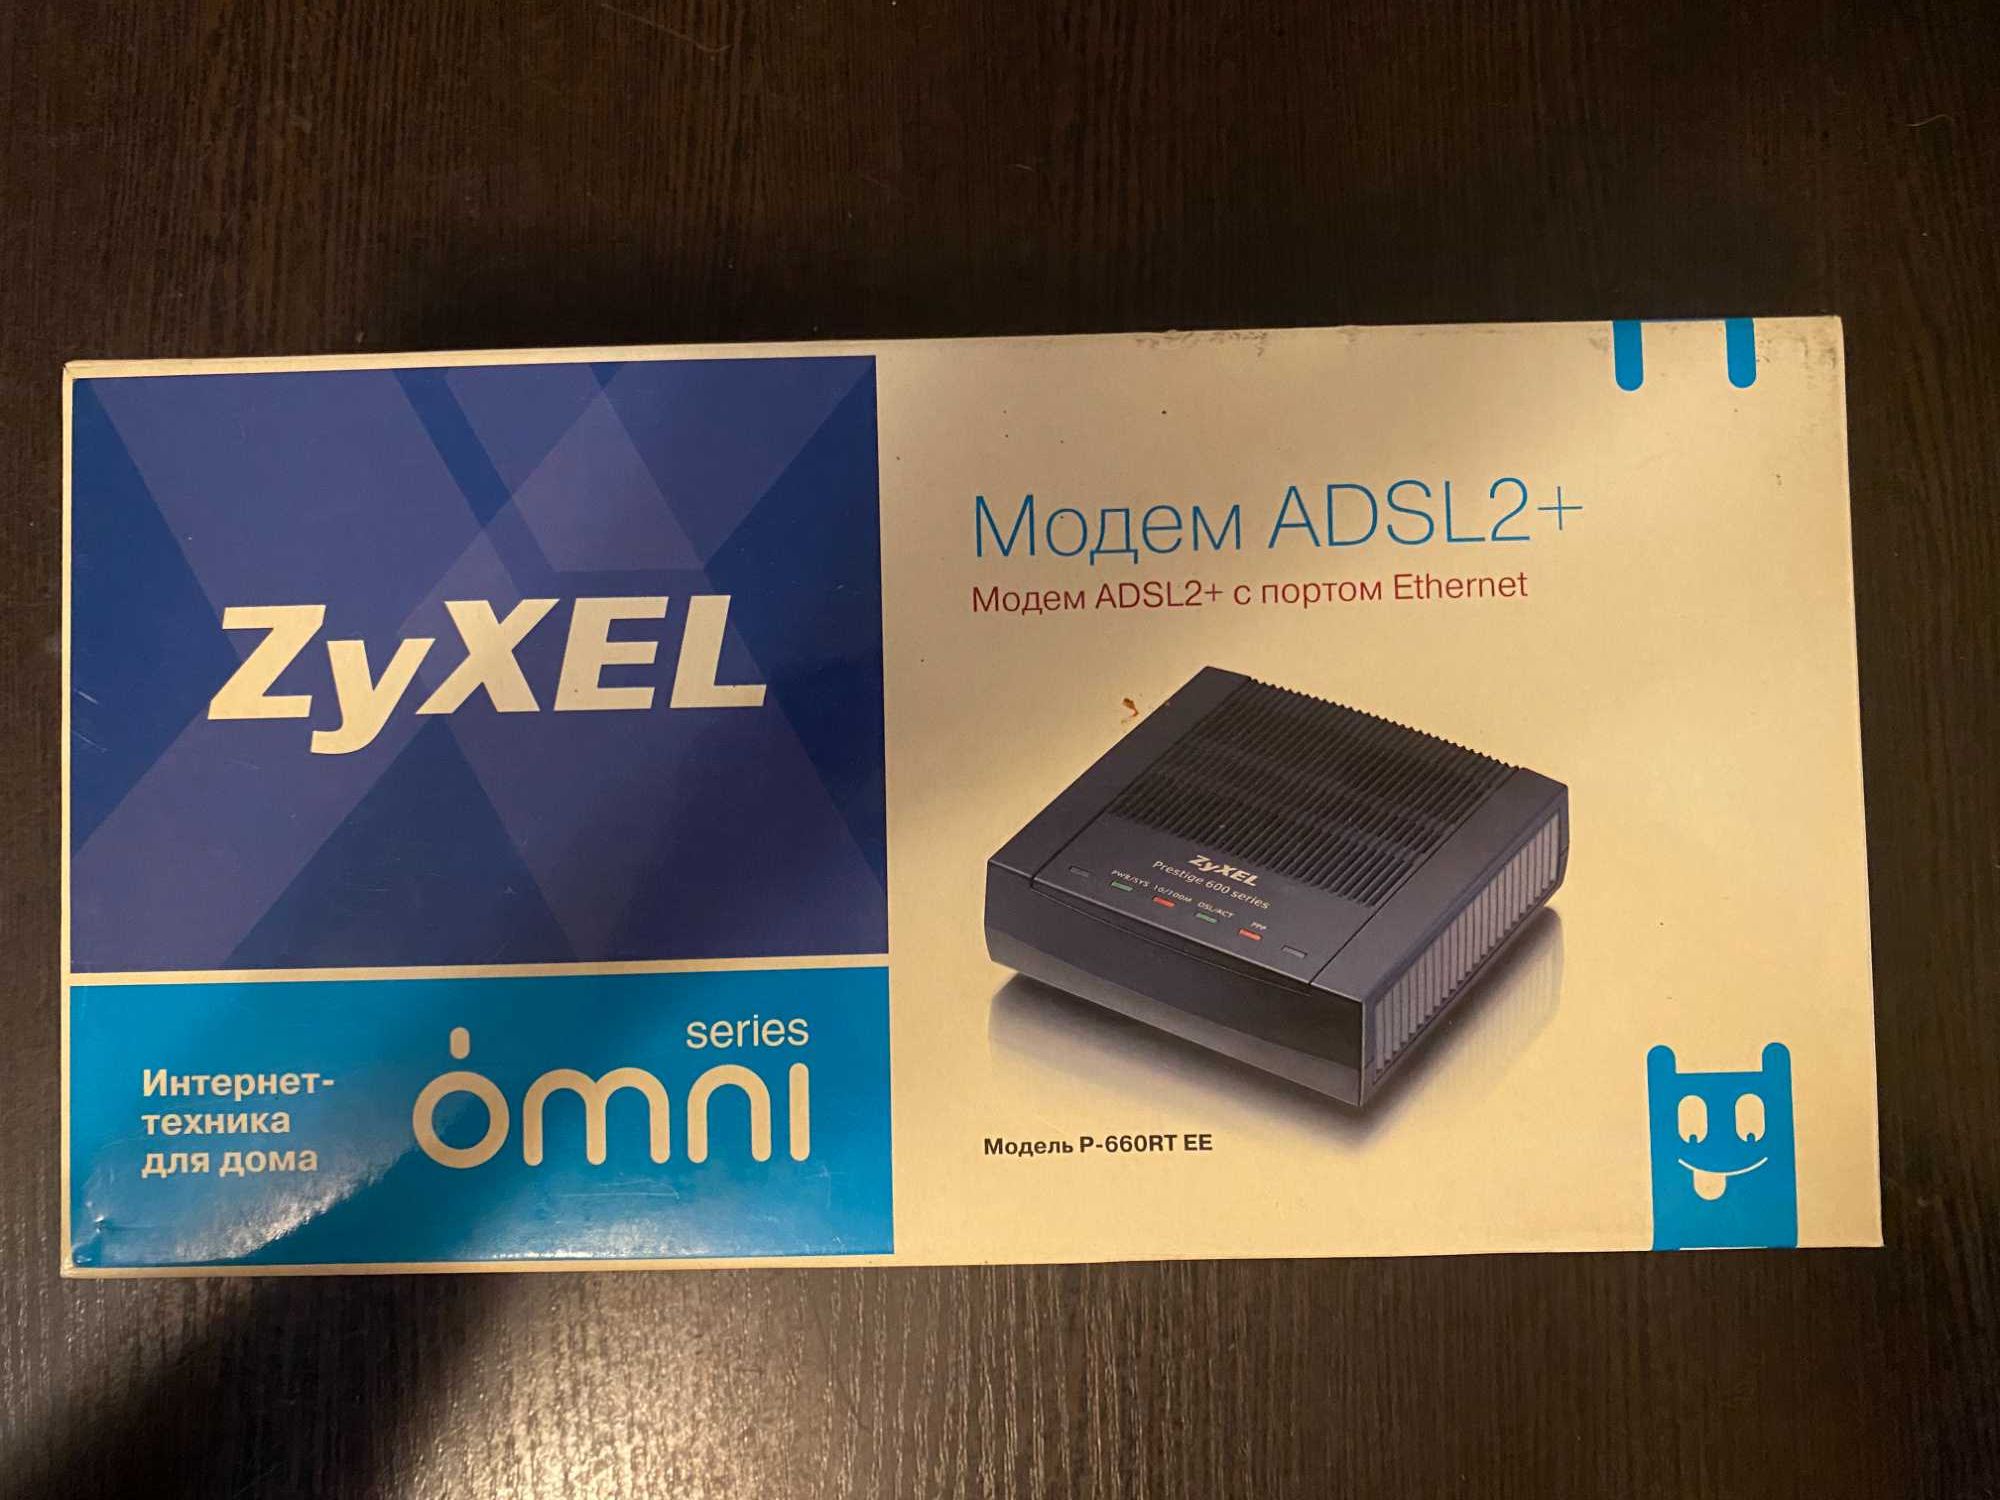 Модем-маршрутизатор (роутер) Zyxel P660RT2 EE ADSL2+ (новый)